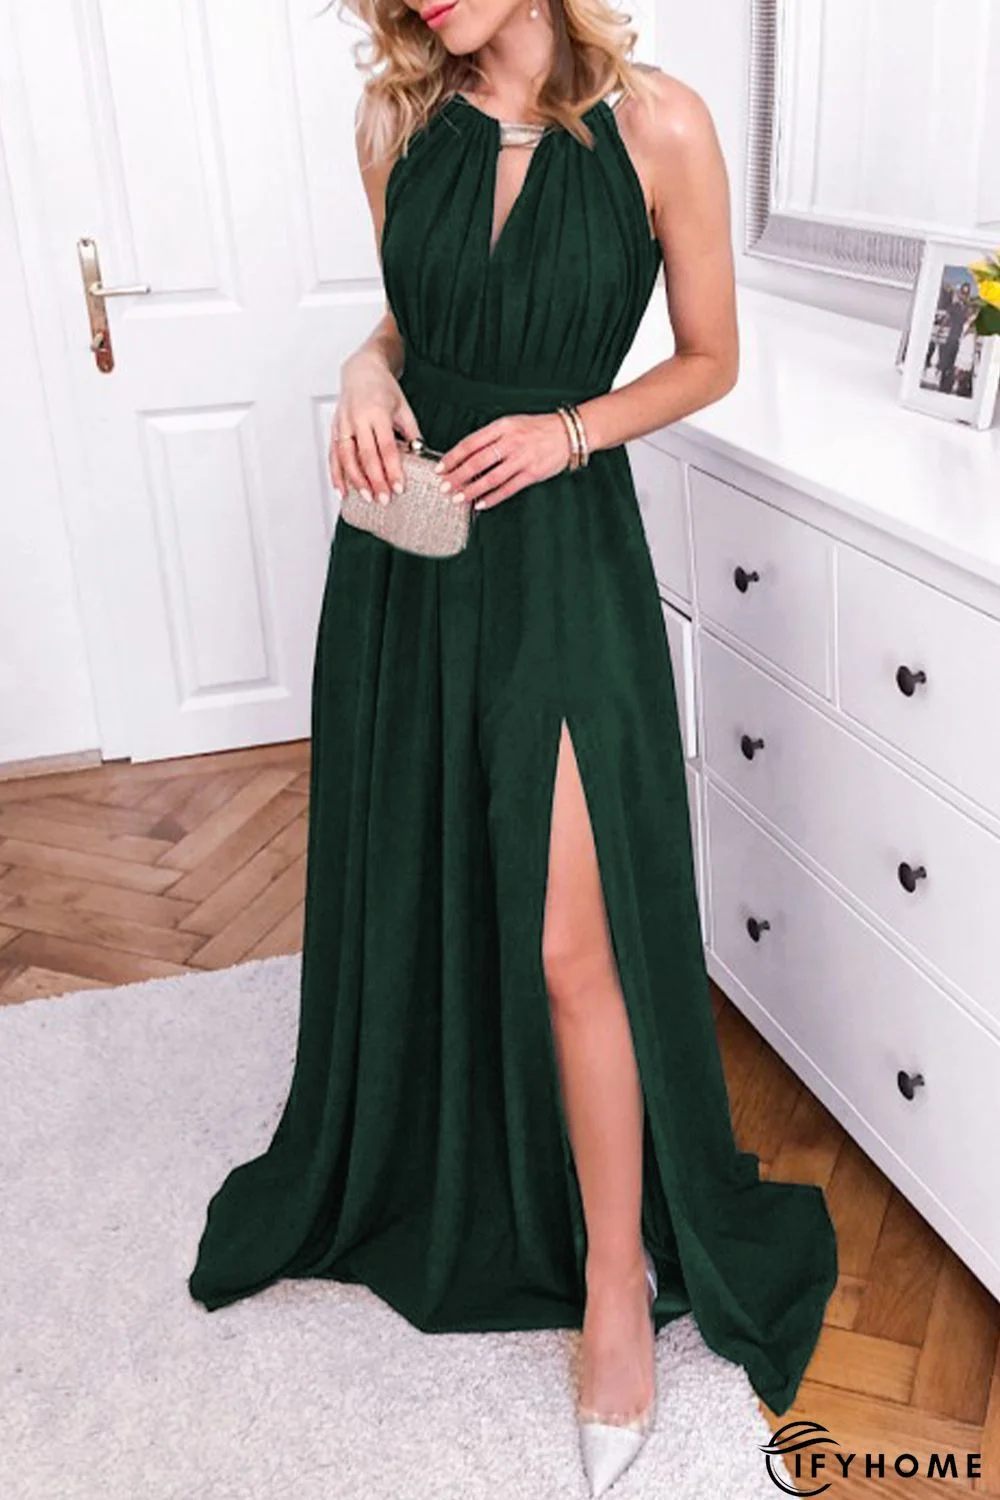 Green Glitter Trim Cutout Strapless Slit Party Dress | IFYHOME